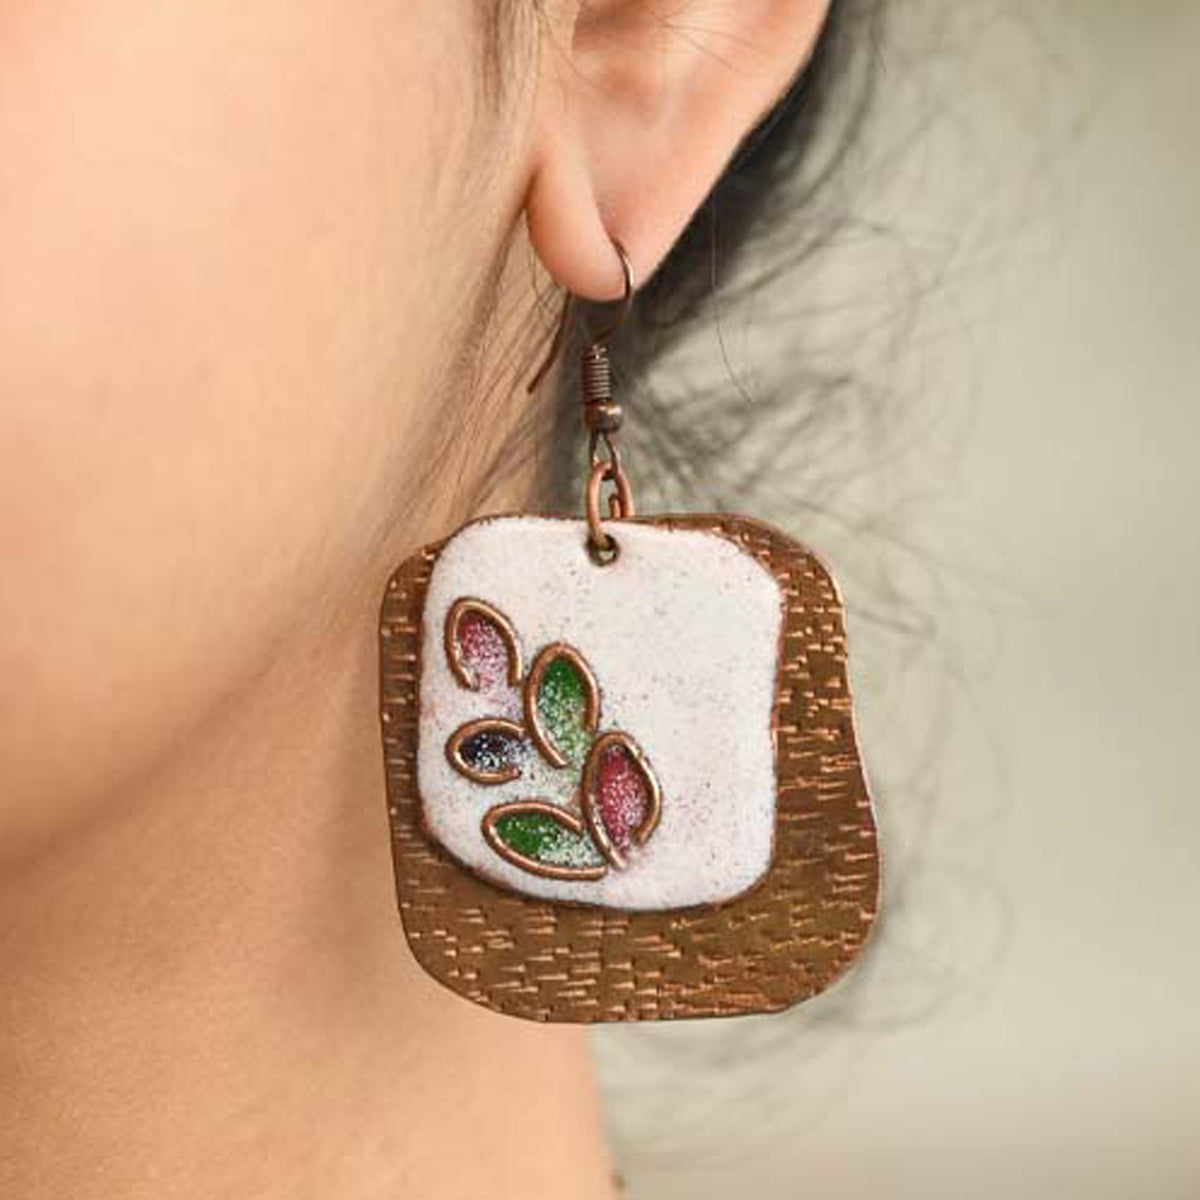 Buy Leaflet White Earrings in Copper Enamel Online in India l iTokricom   iTokri आईटकर